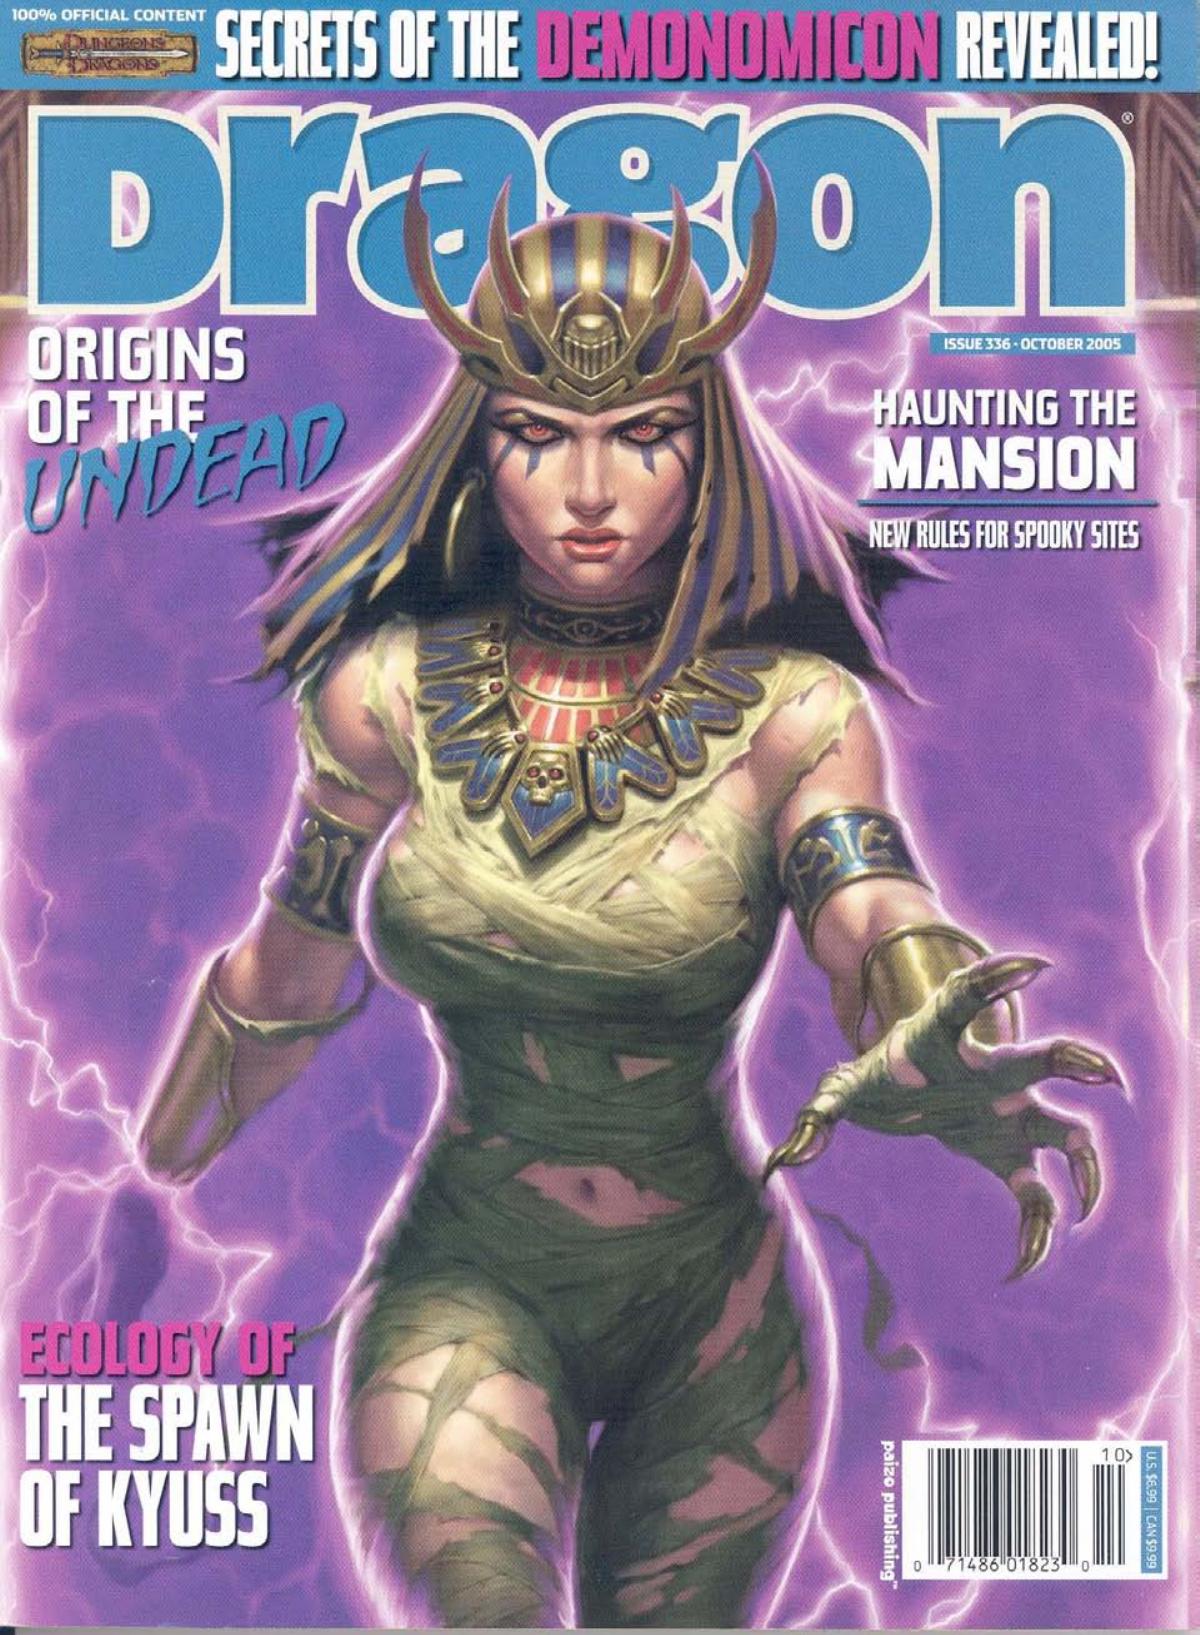 Dragon Magazine #336